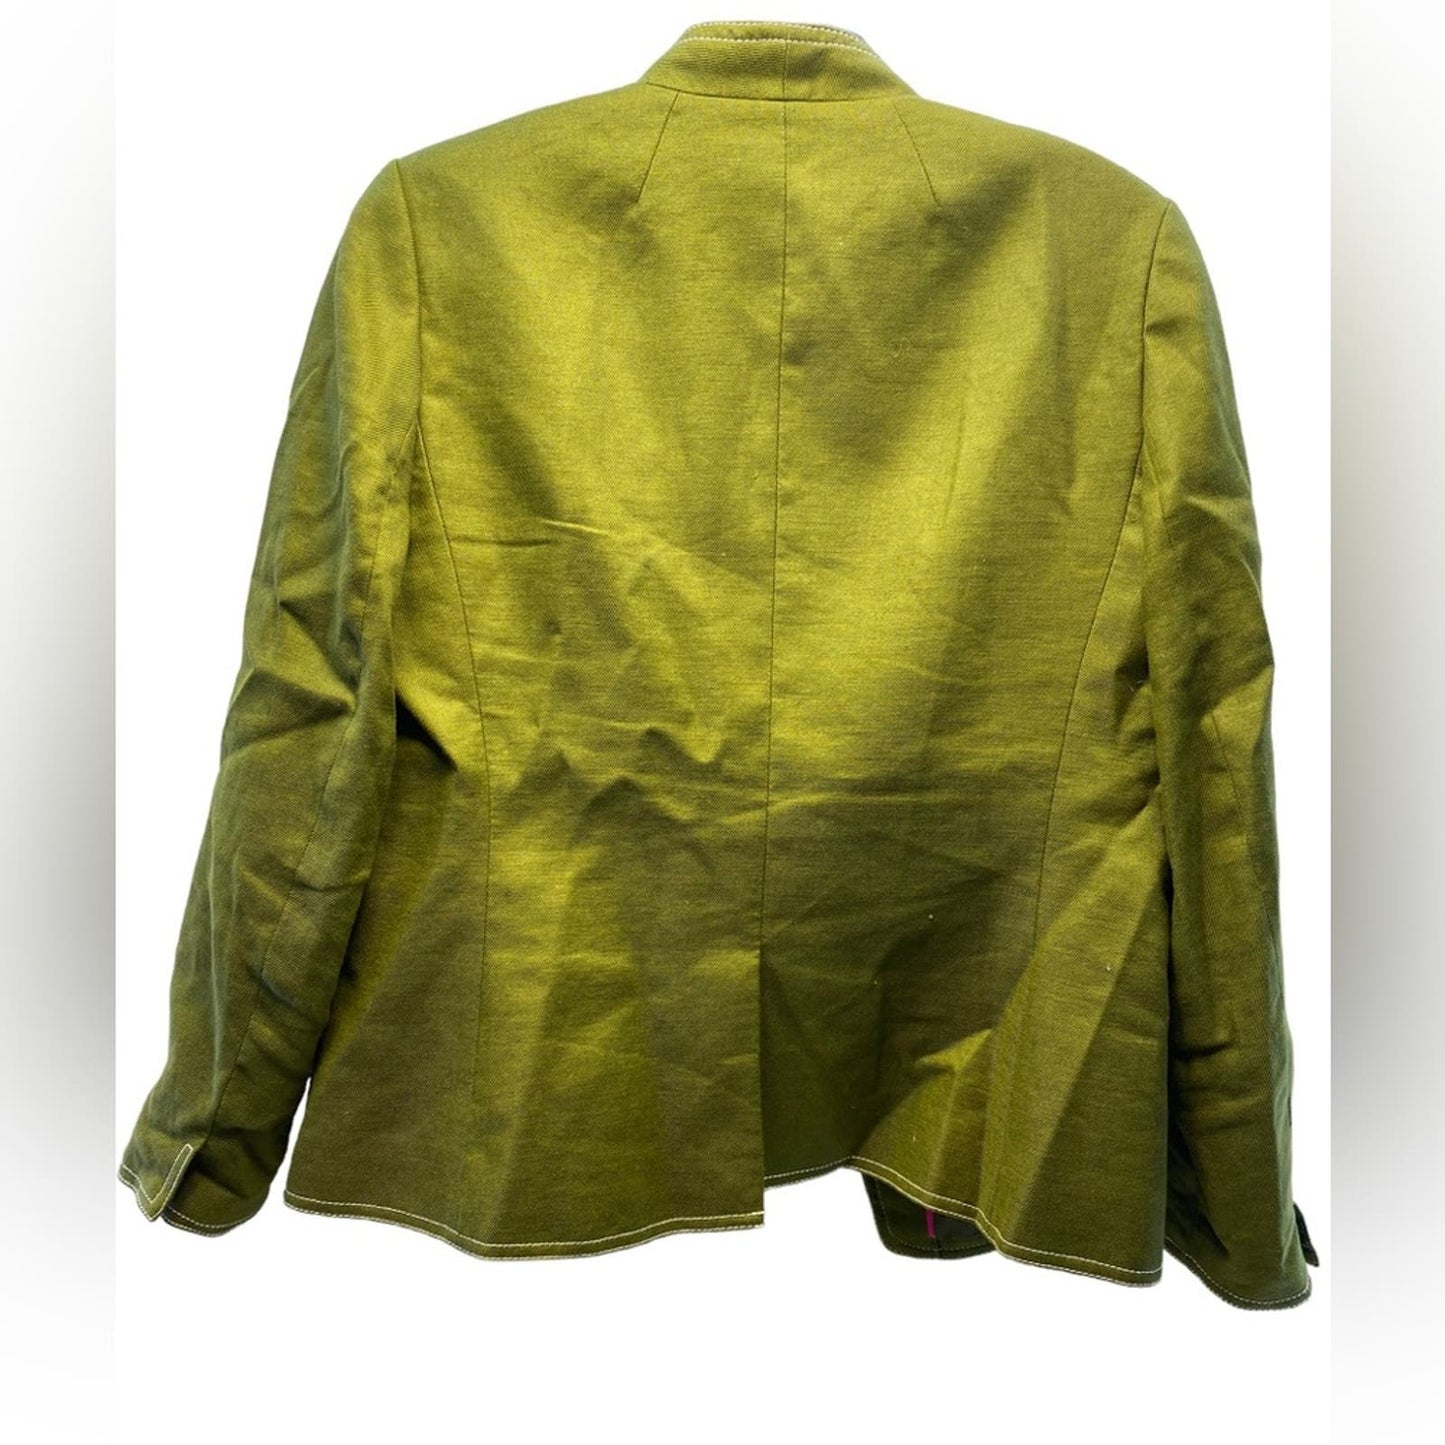 J. Crew Olive Green 3/4 Length Sleeve Linen Blend Blazer